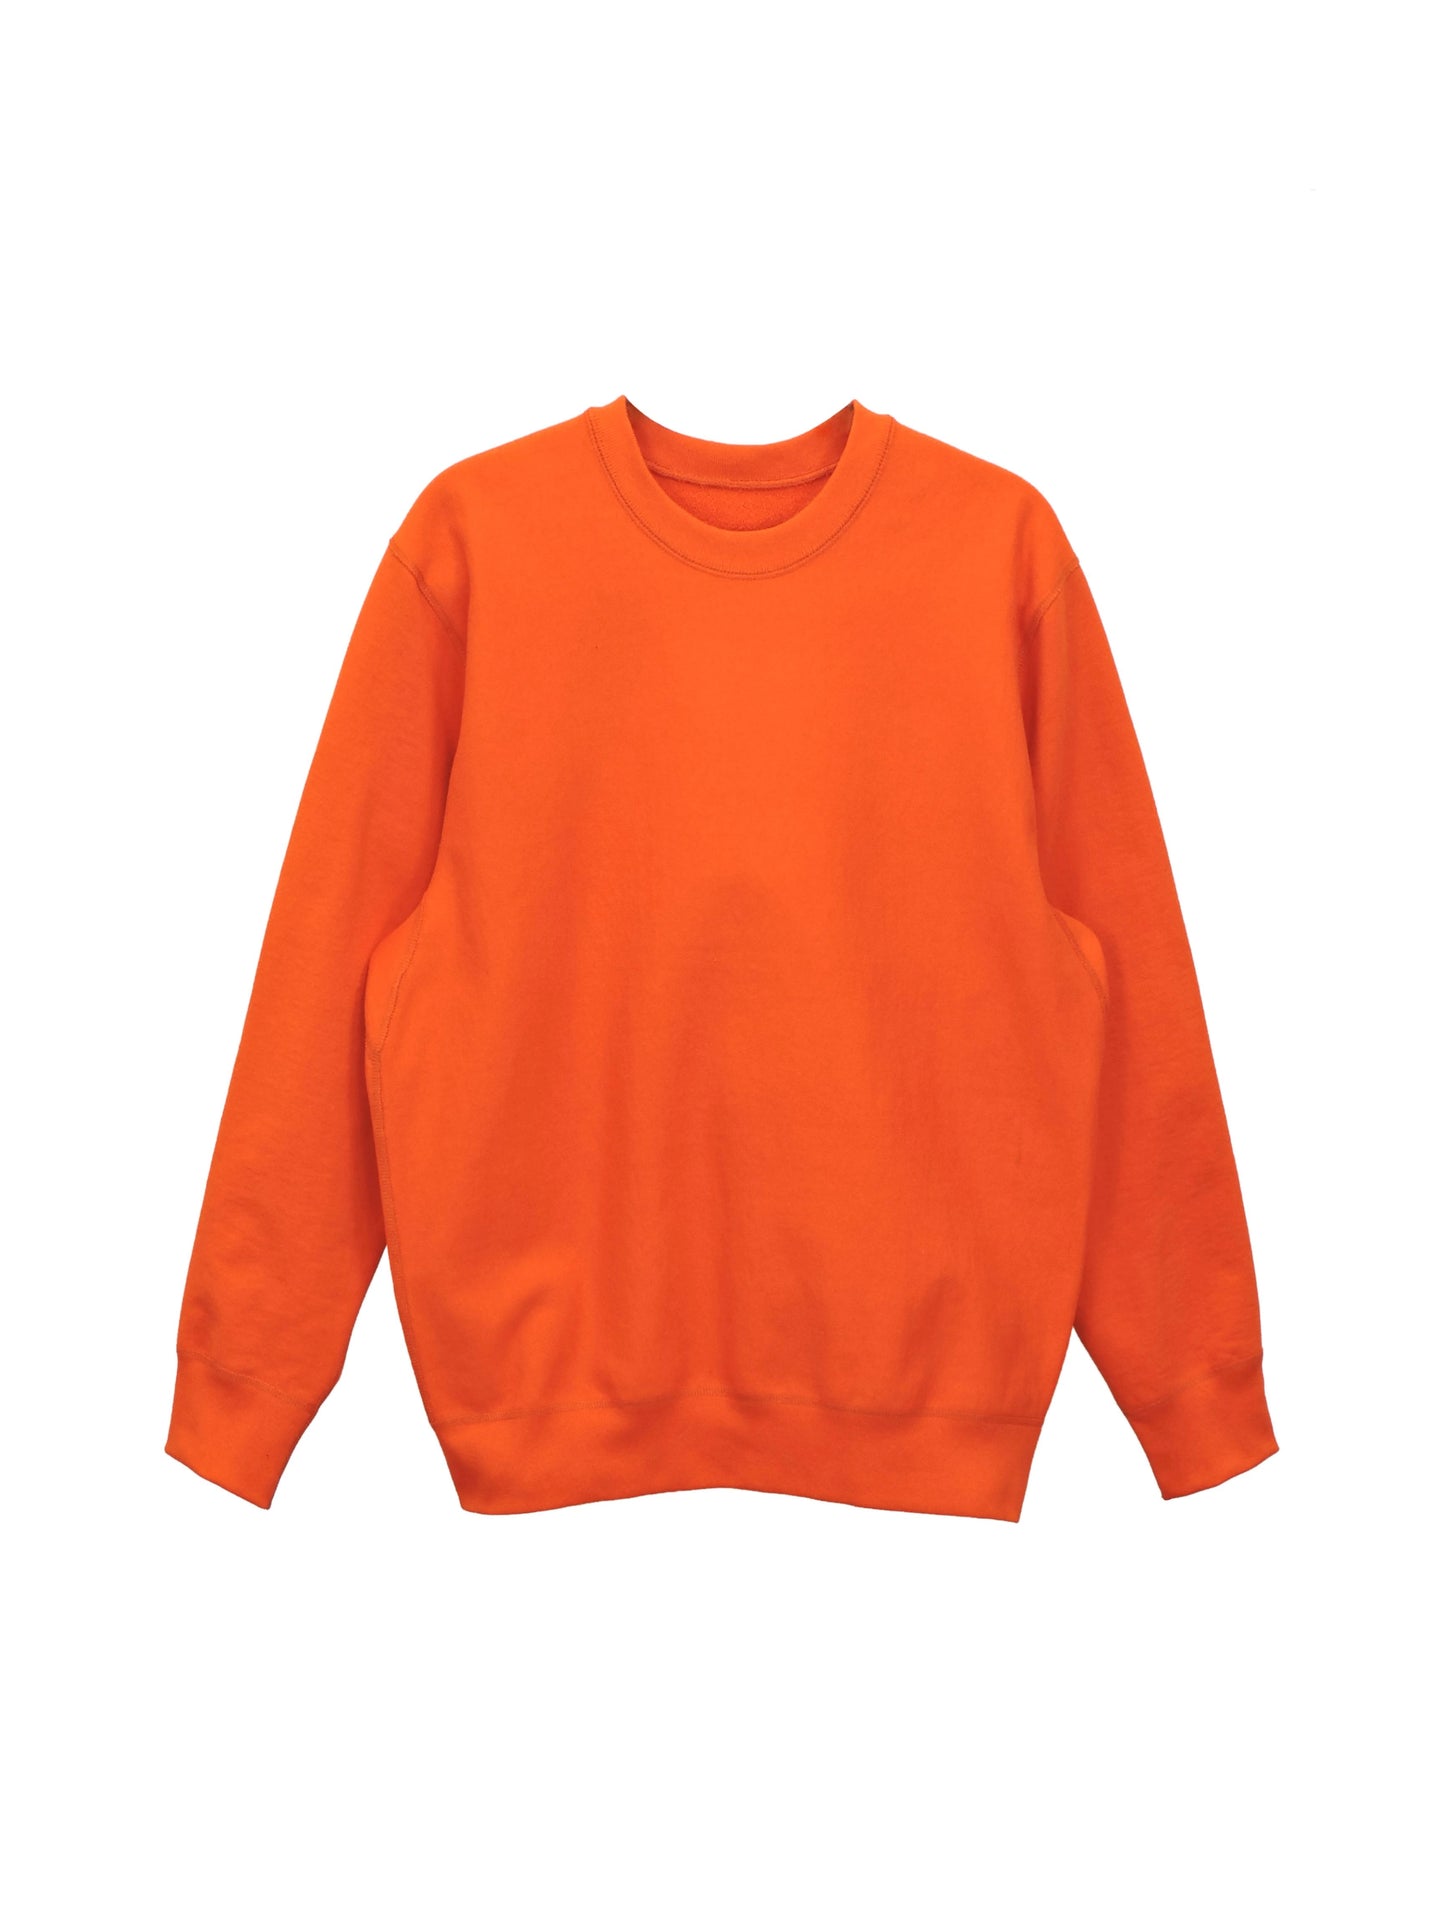 Orange Crewneck Sweater with Wide, Loose Fit